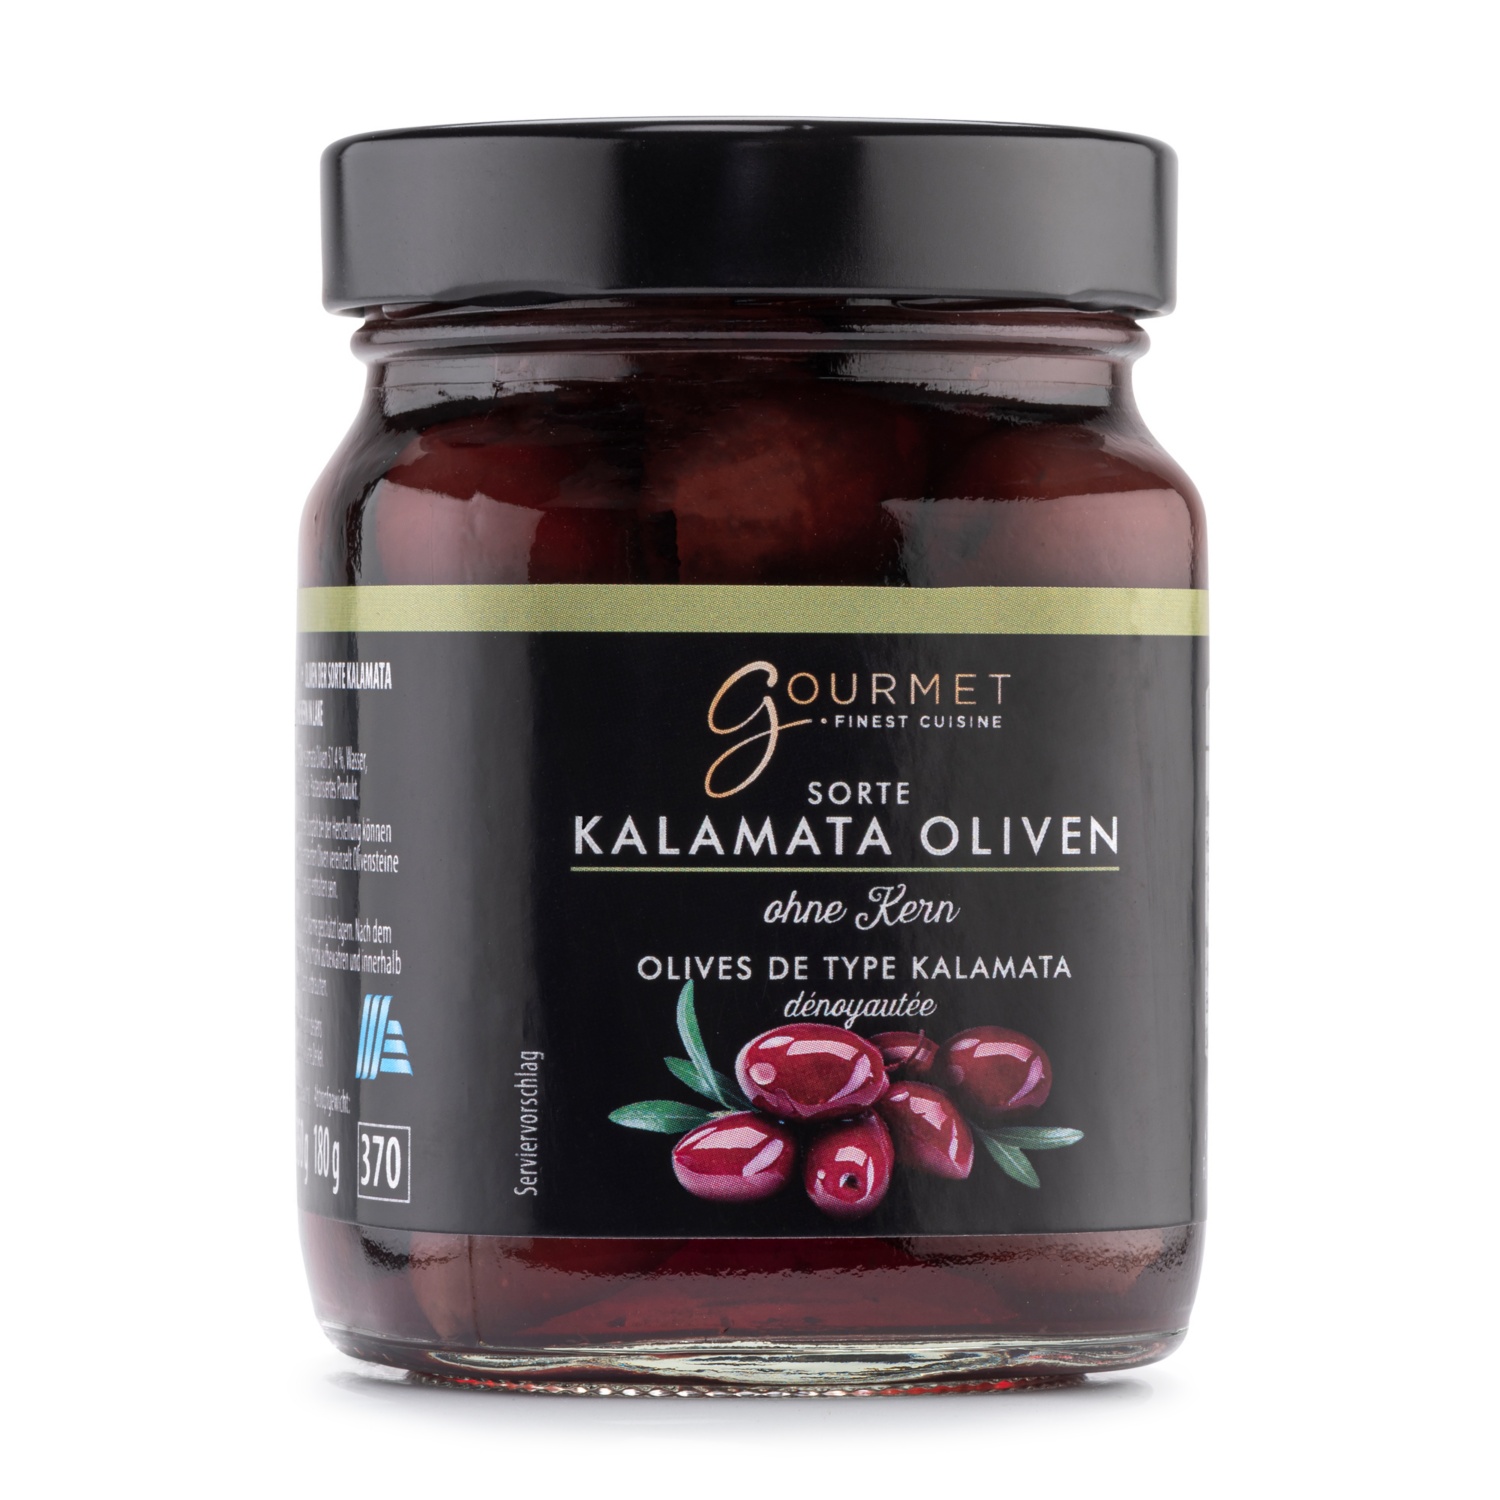 GOURMET Kalamata Oliven, ohne Kern